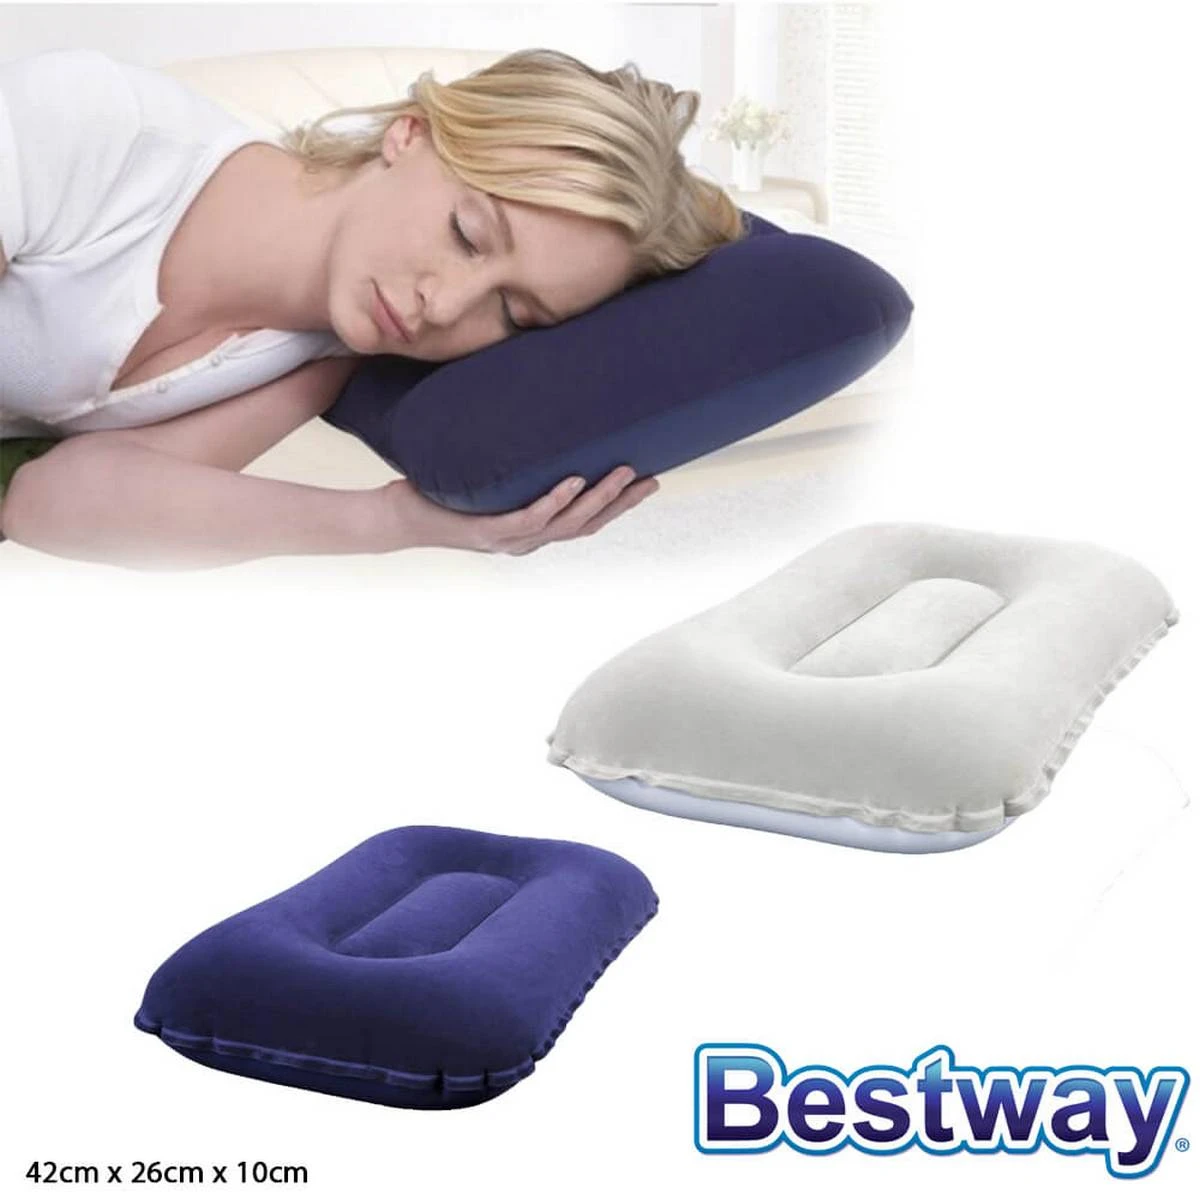 Bestway Pillow